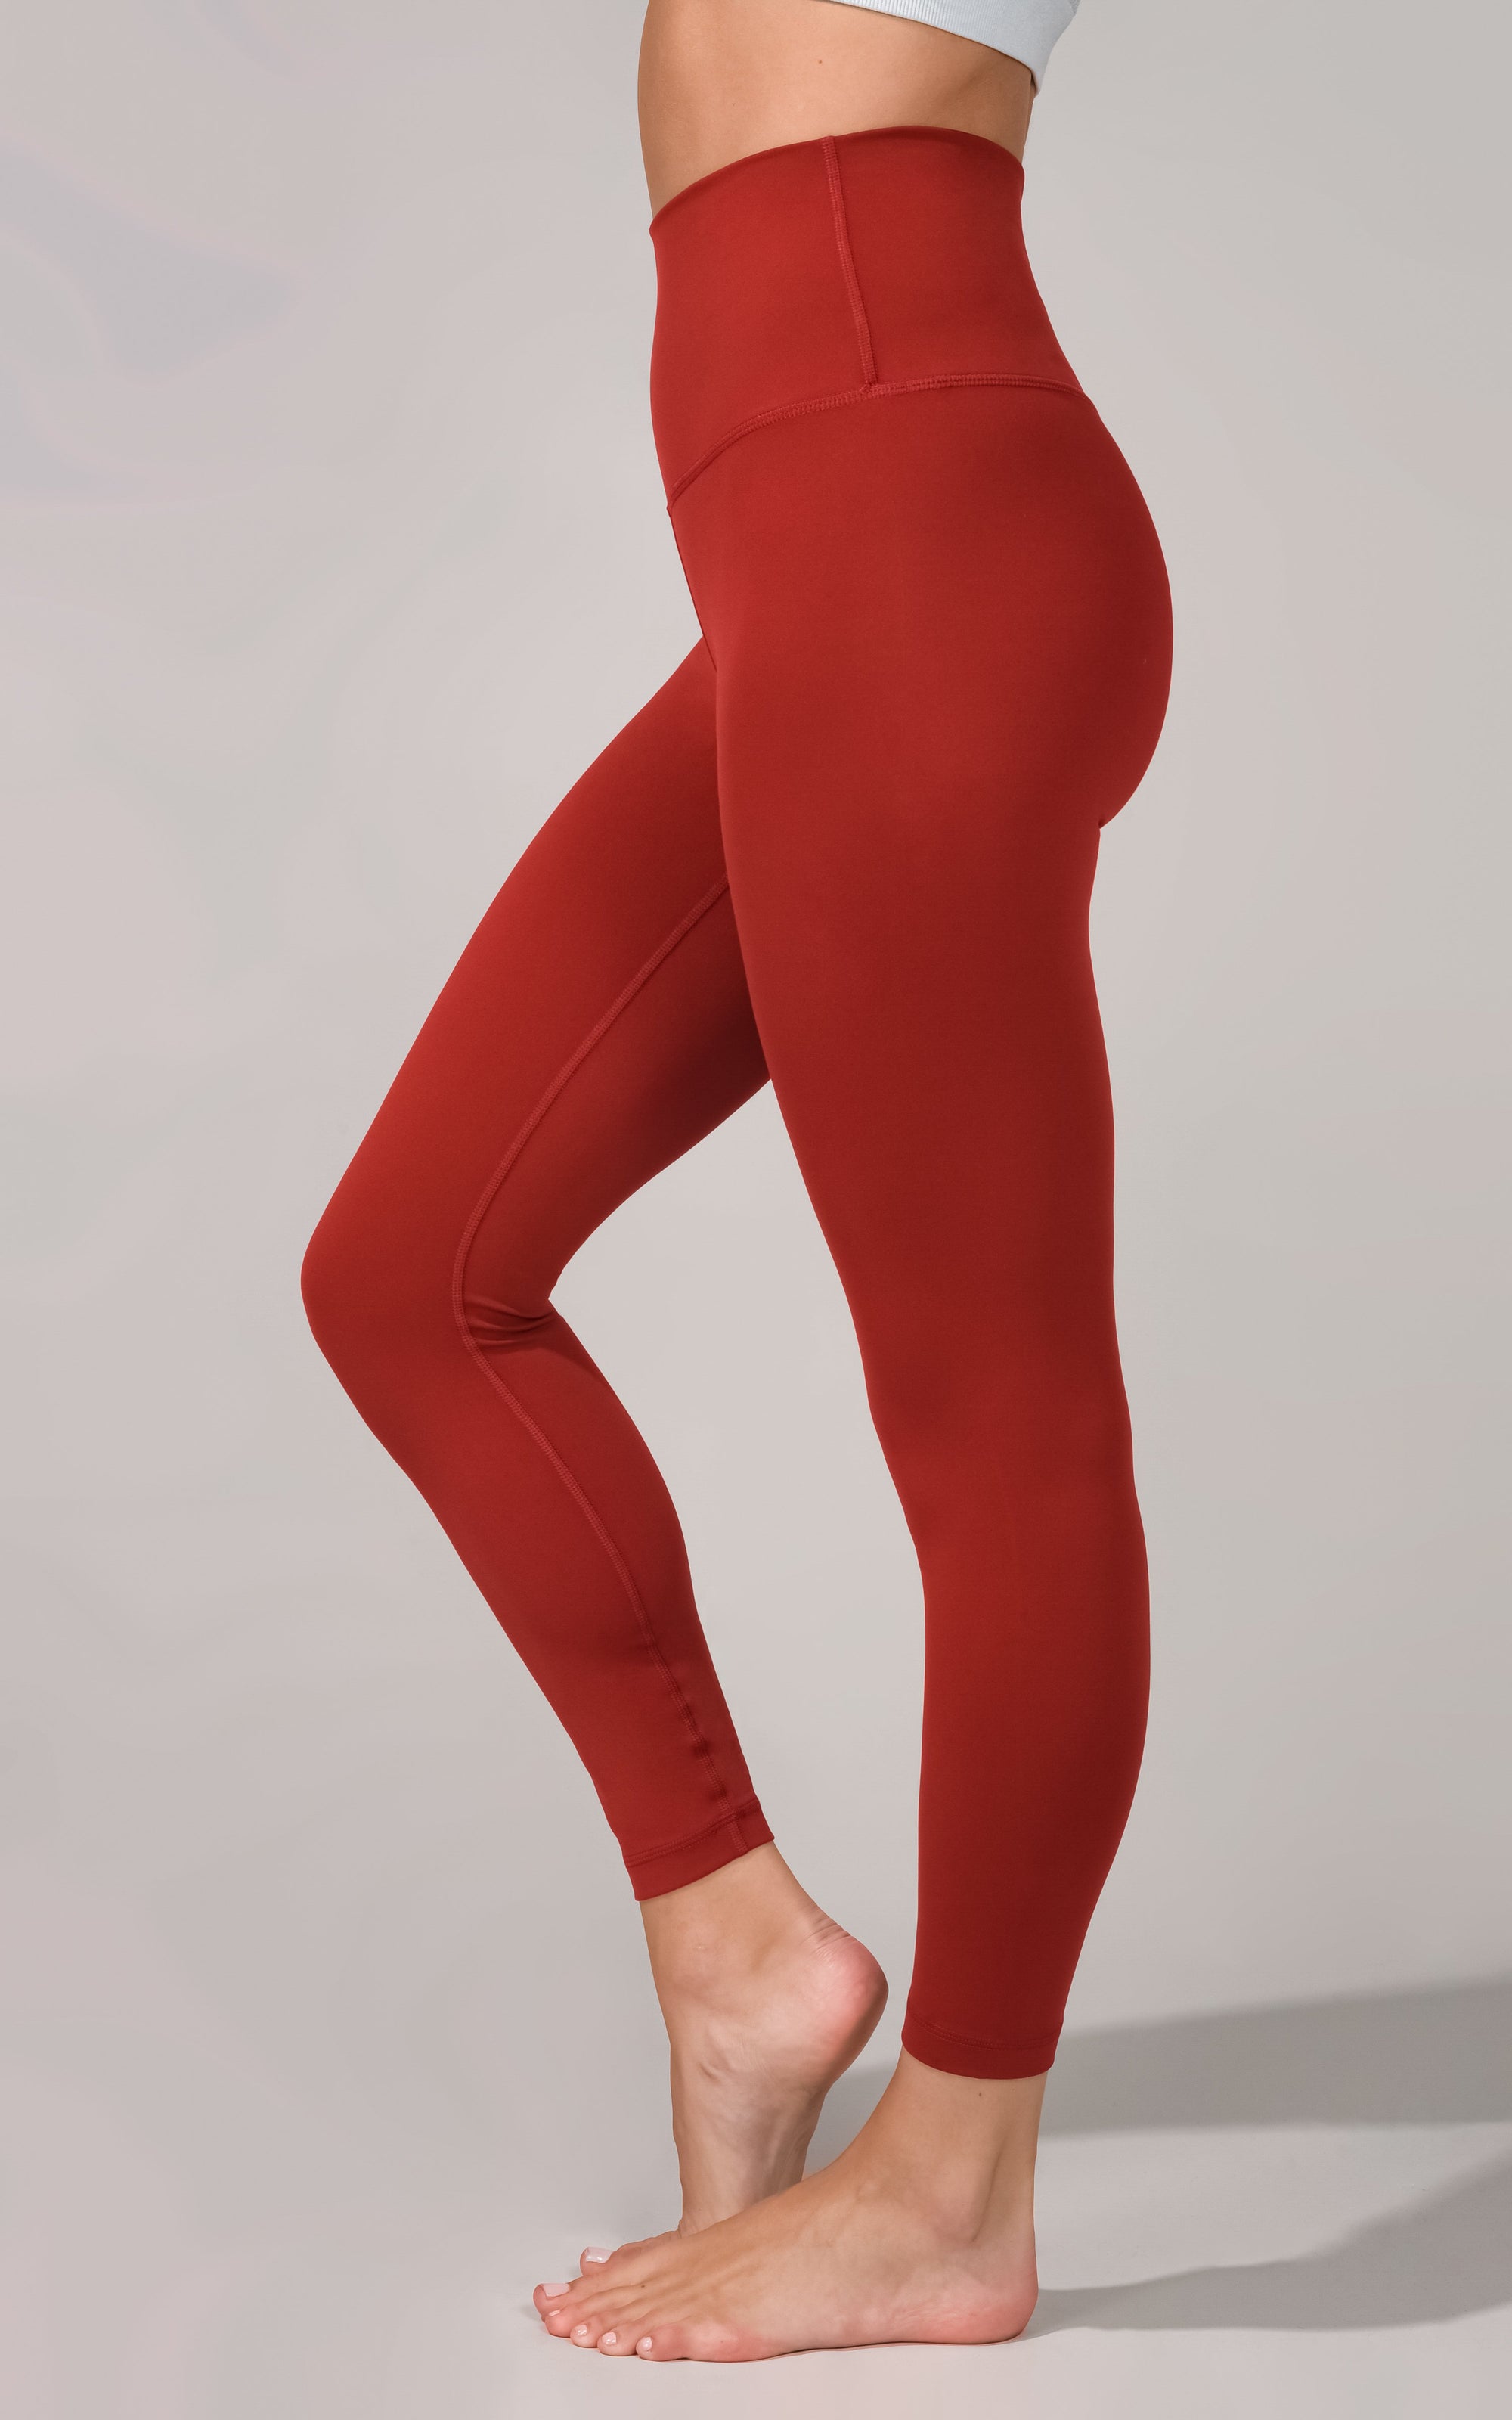 YWDJ Leggings for Women High Waist Yogalicious Print Patterned Utility  Dressy Everyday Soft Irregular Printing Leggings Printing High Waist  Stretch Strethcy Fitness Leggings Yoga Pants Red XL 